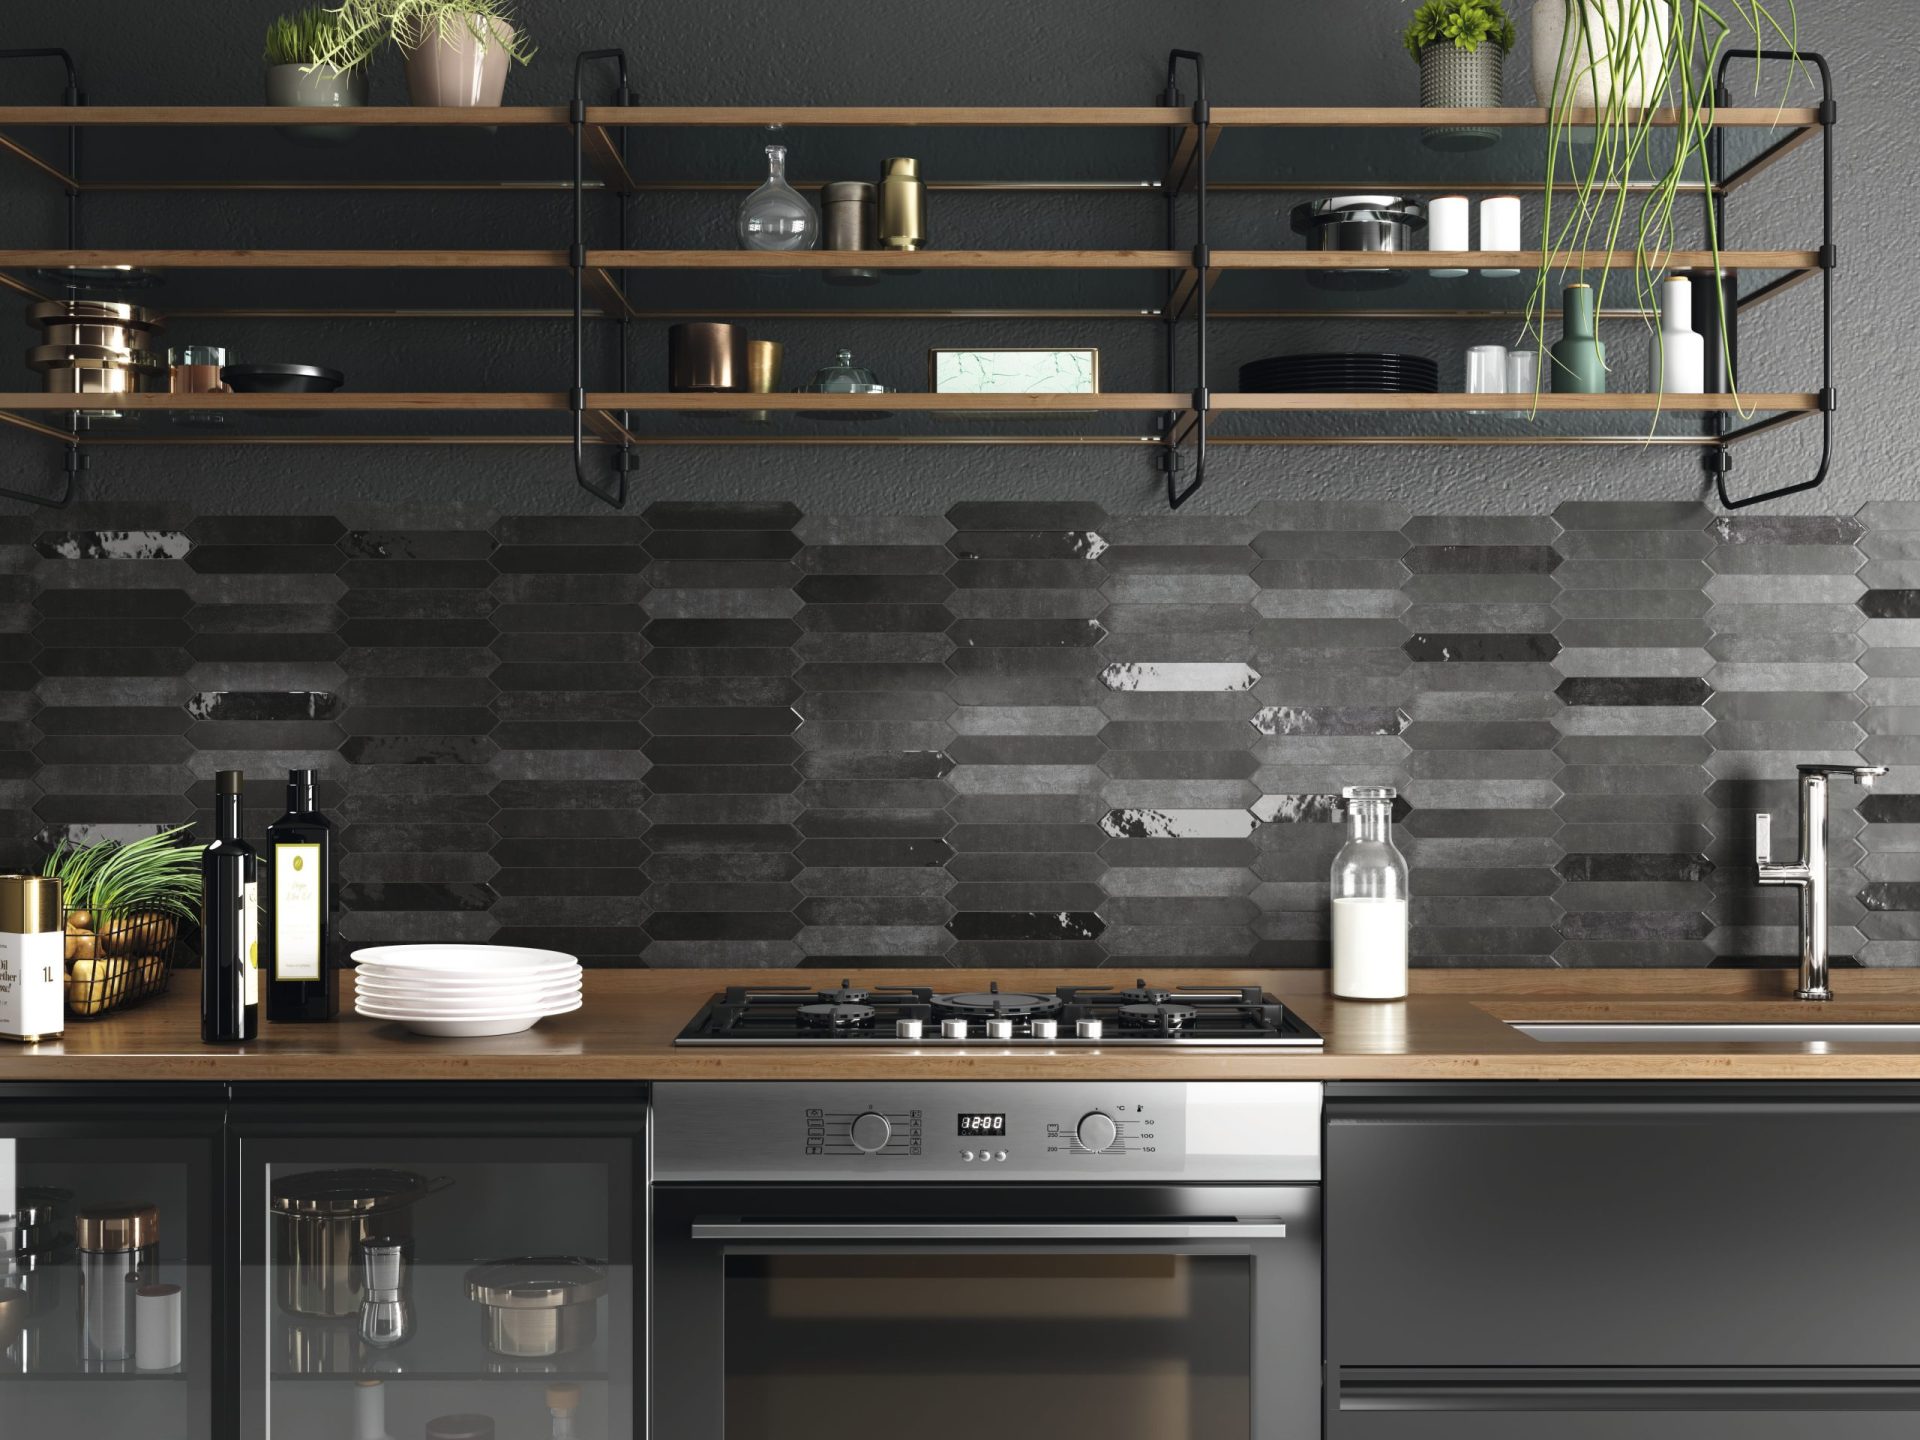 Switch ceramic tile in graphite on a kitchen backsplash.